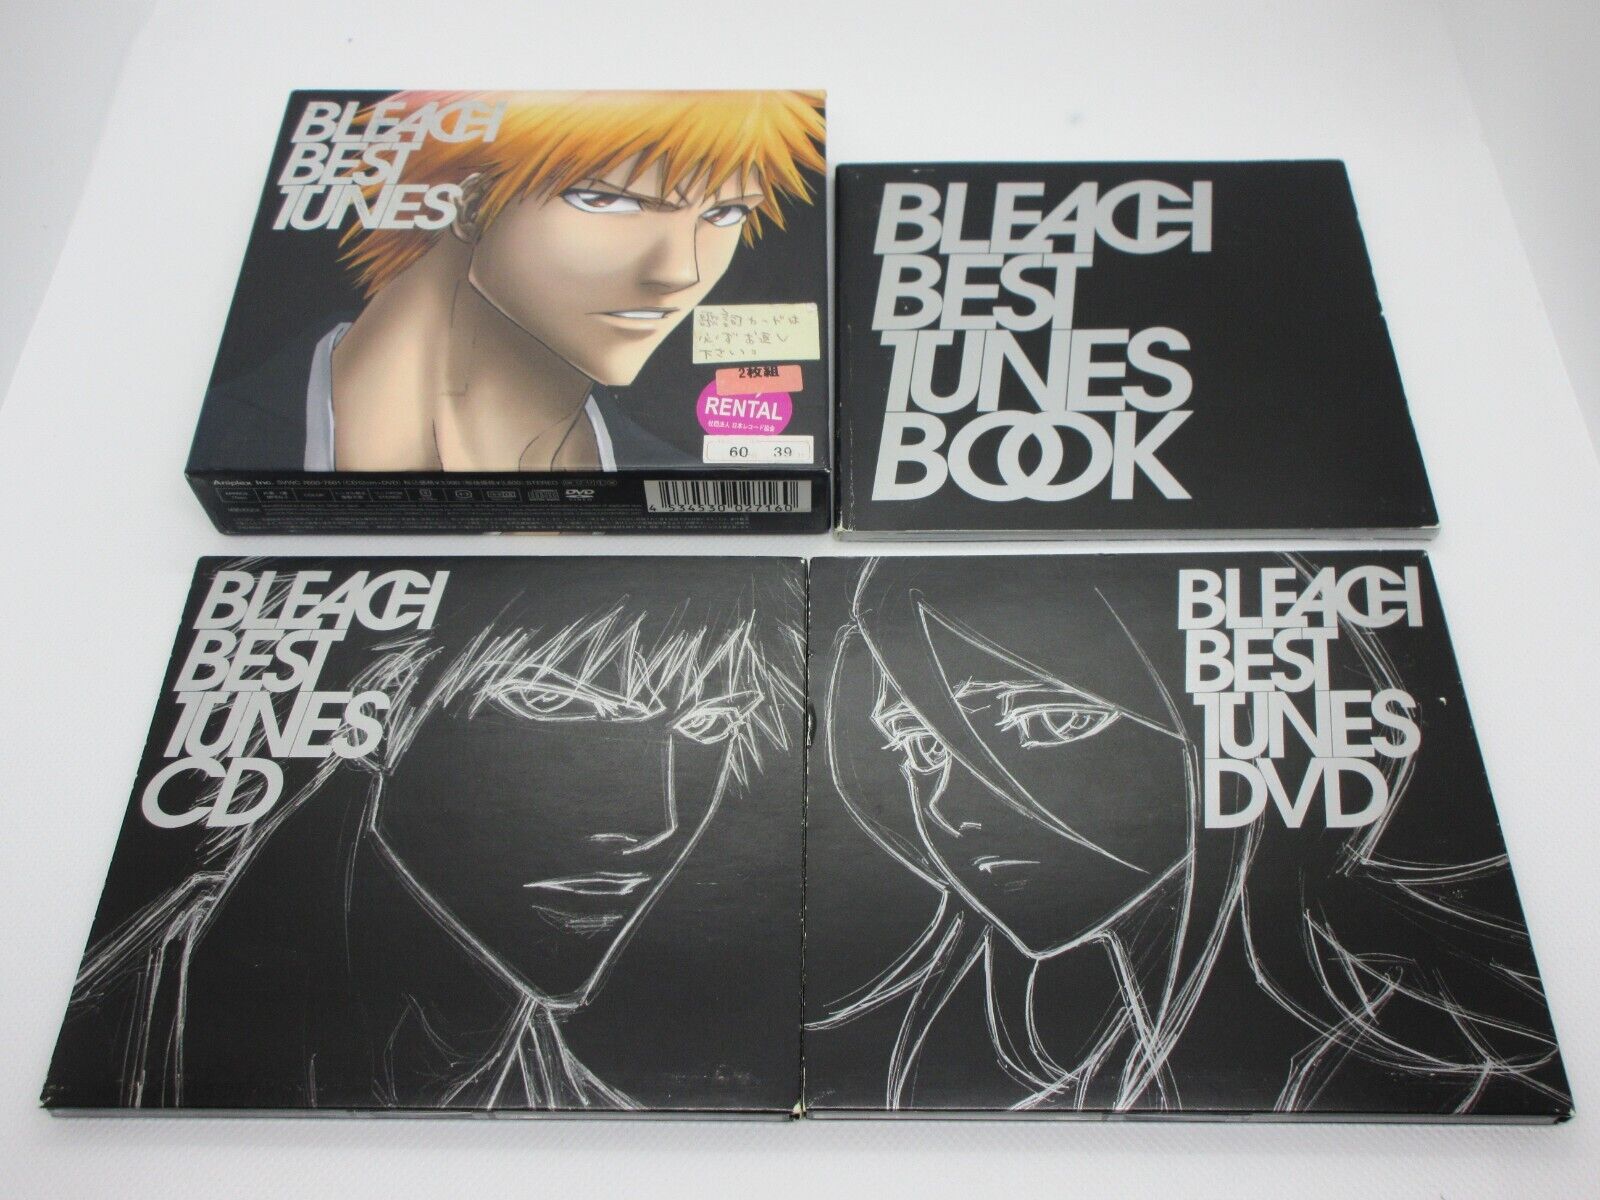 CD Music Bleach Best Tunes DVD Set Japan Anime